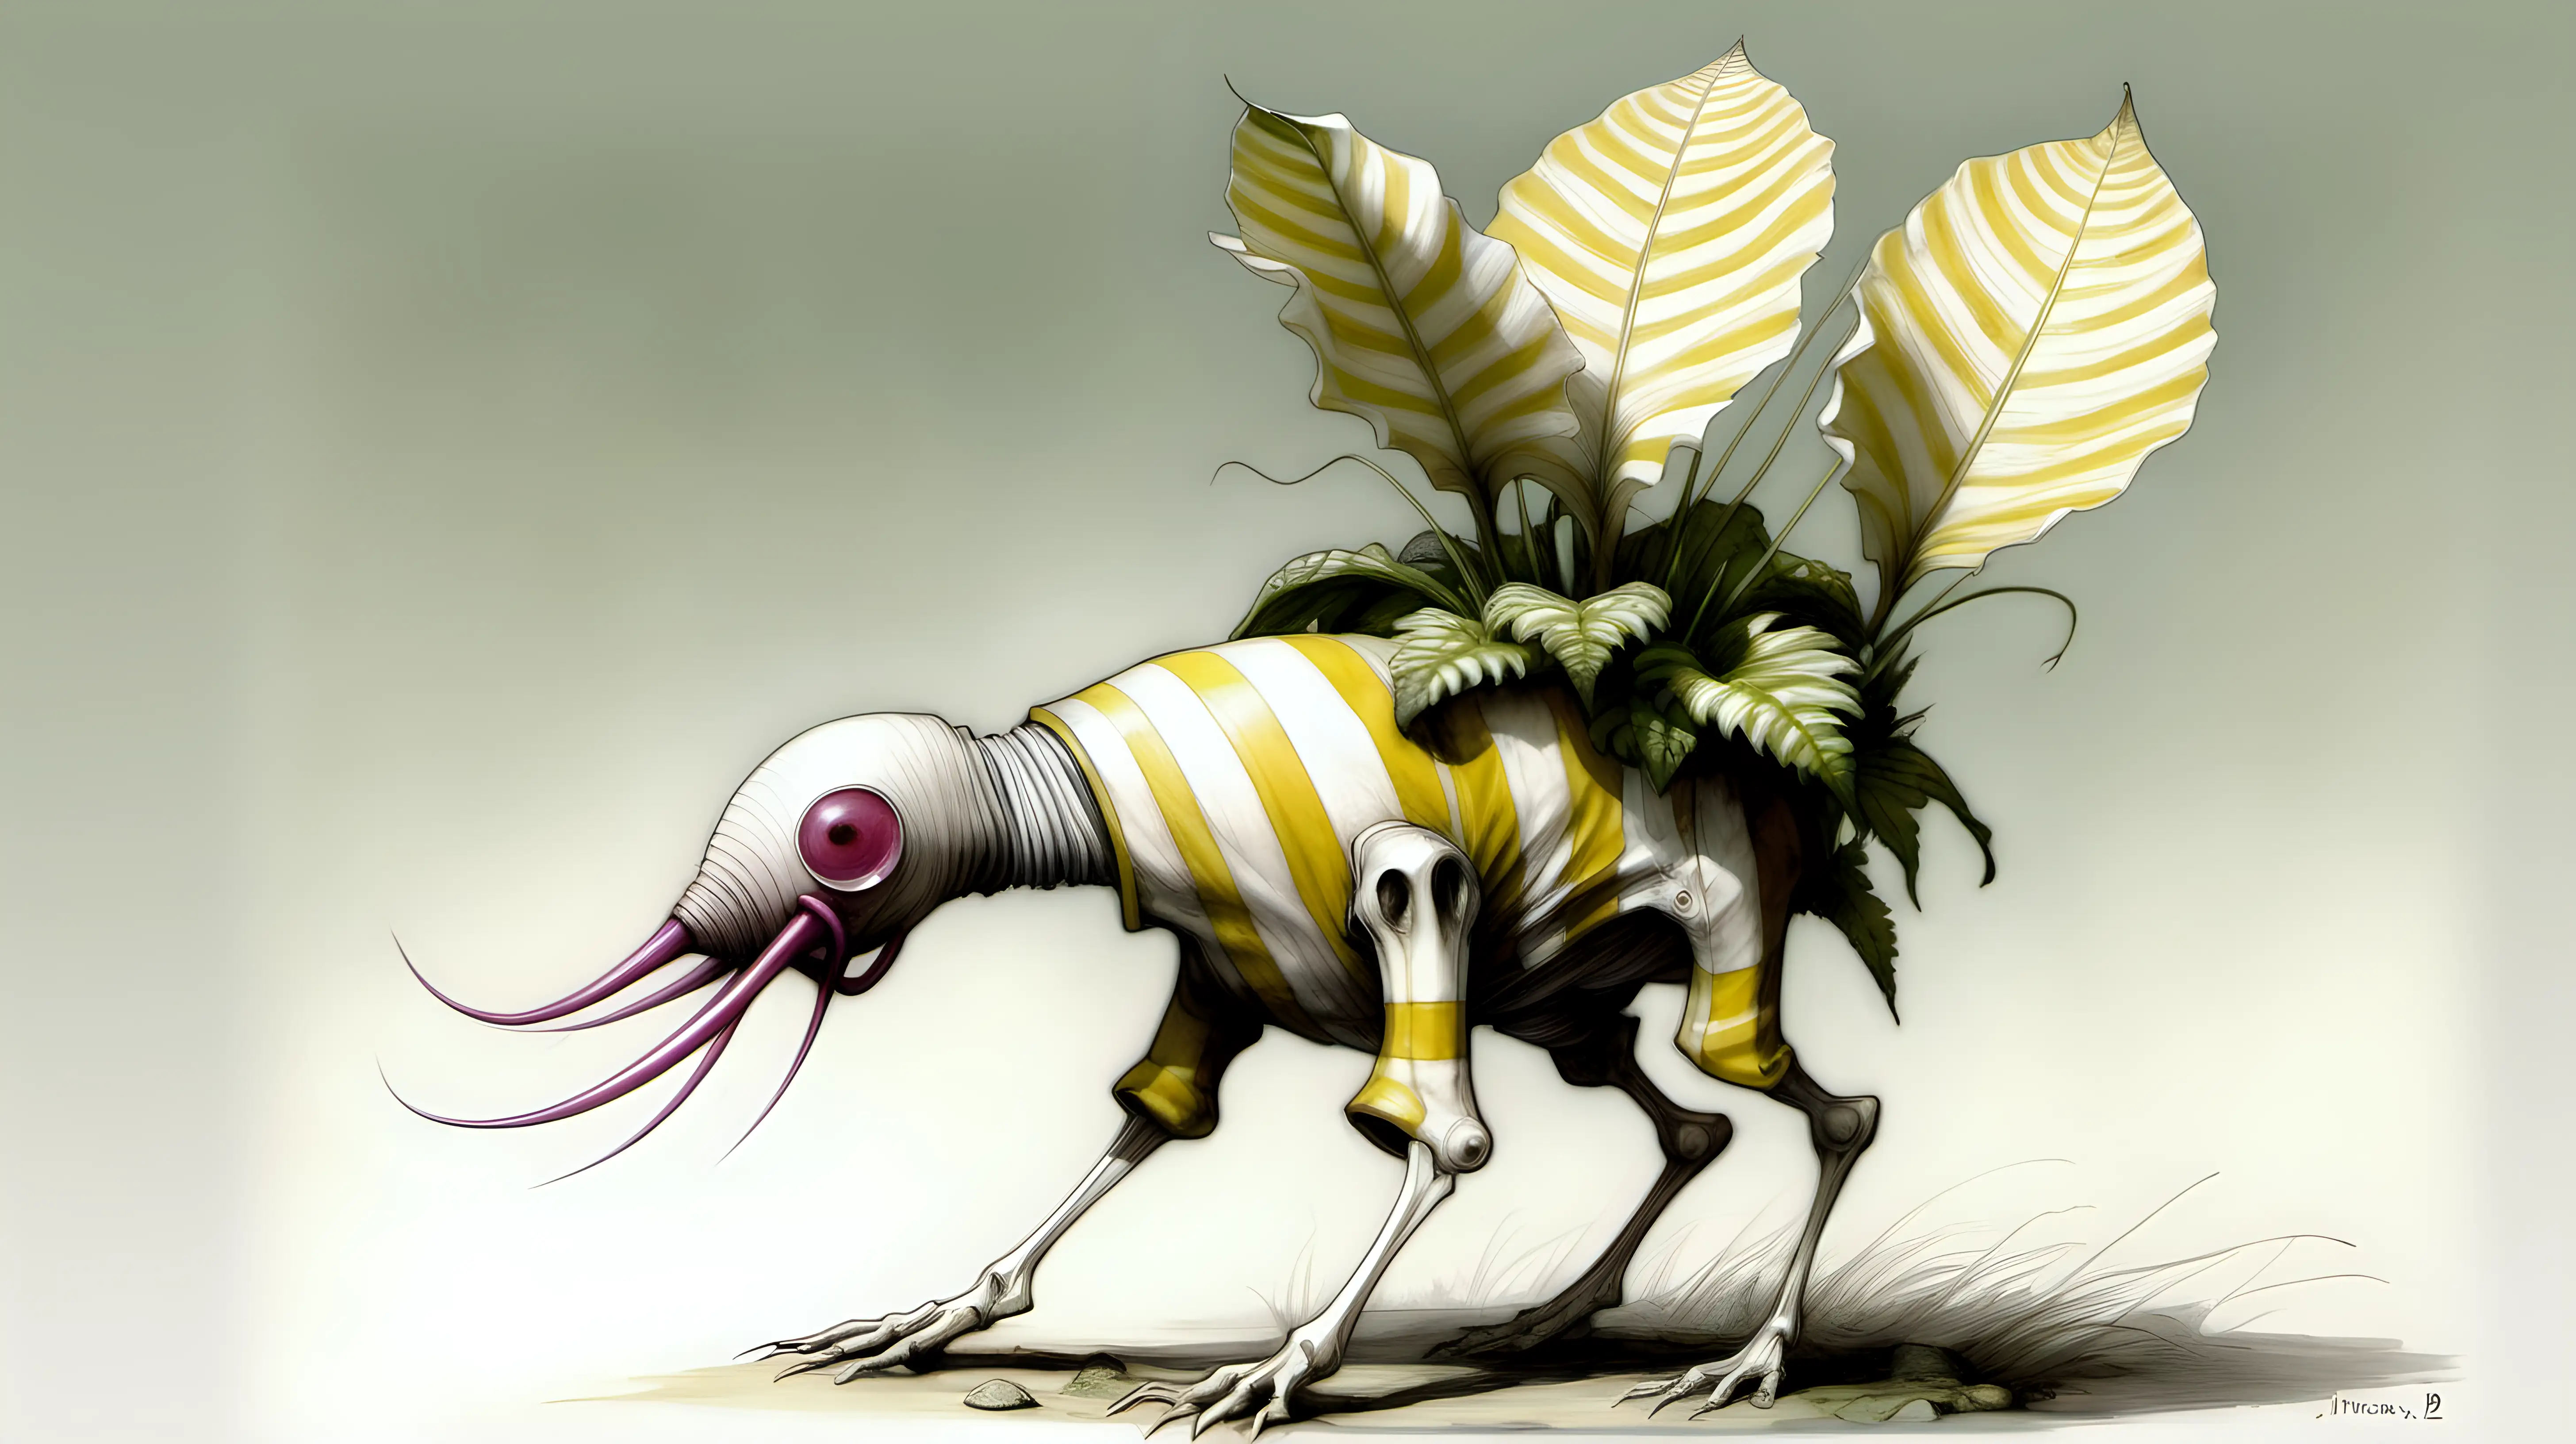 Artist Jean-Baptiste Monge style. A humanoid cyclamen-fern-shaped bonestructure creature. Yellow white striped fur. White eyes 